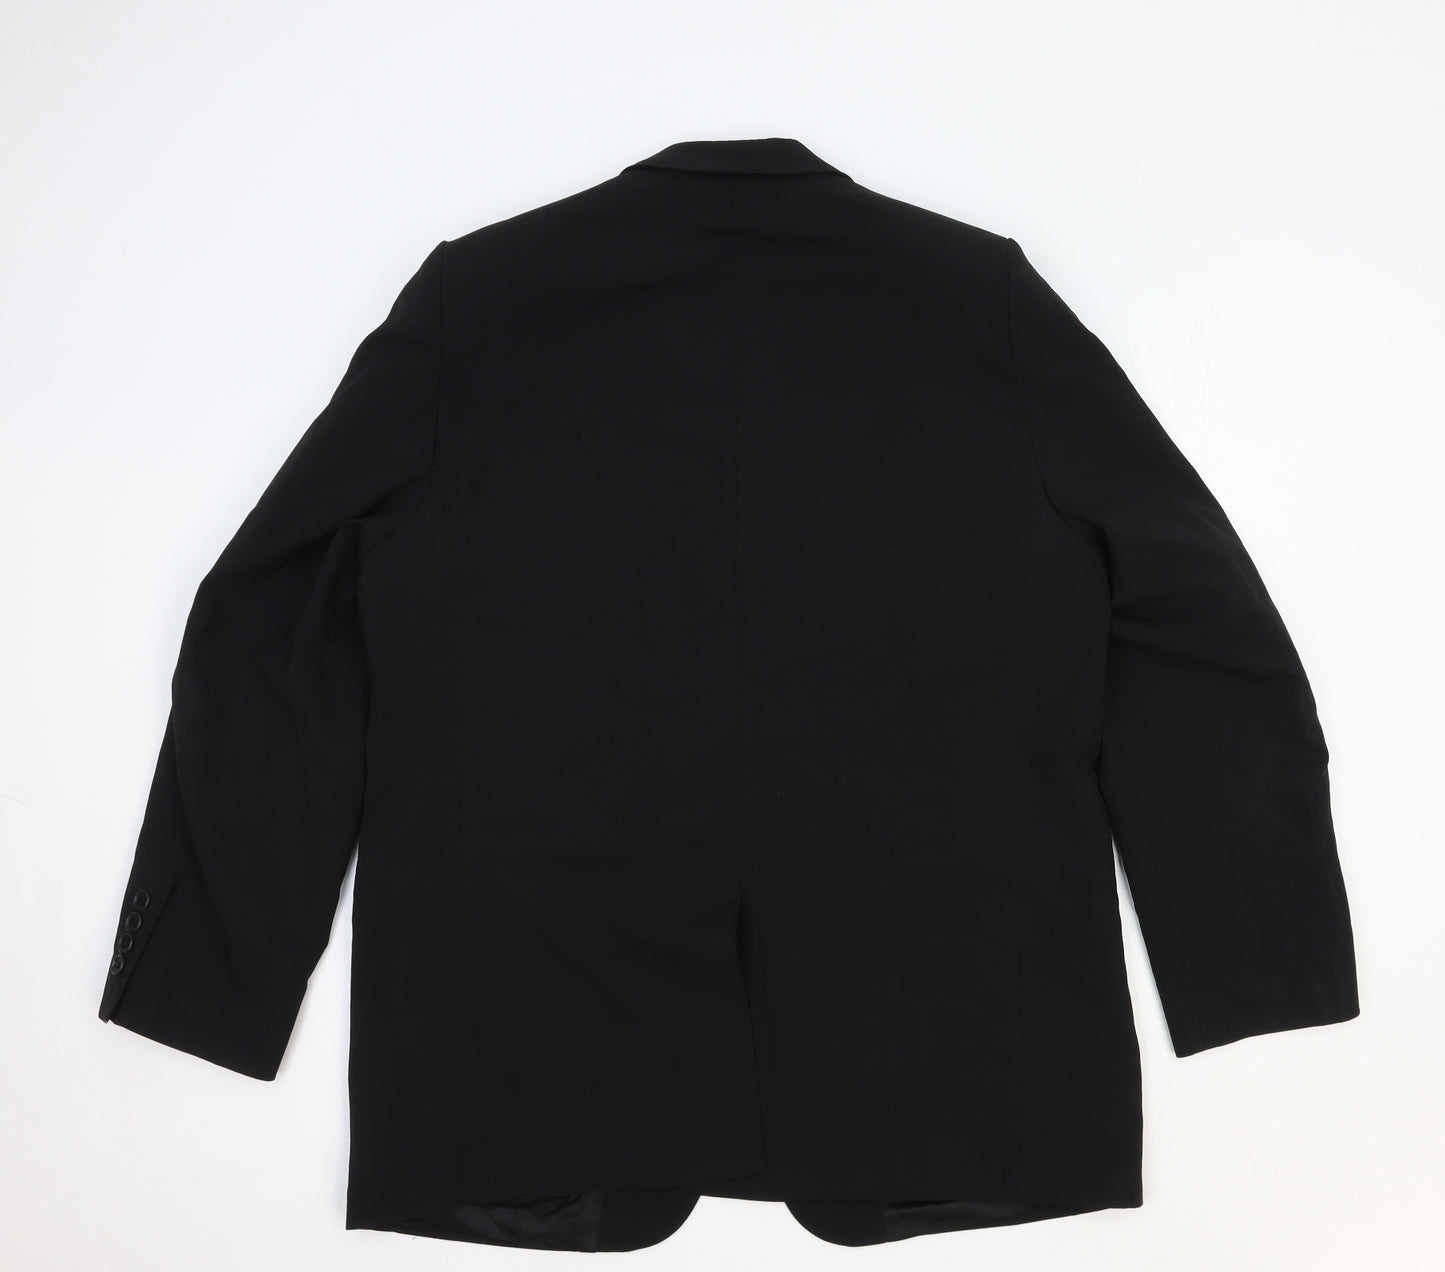 Magee Mens Black Wool Jacket Suit Jacket Size S Regular